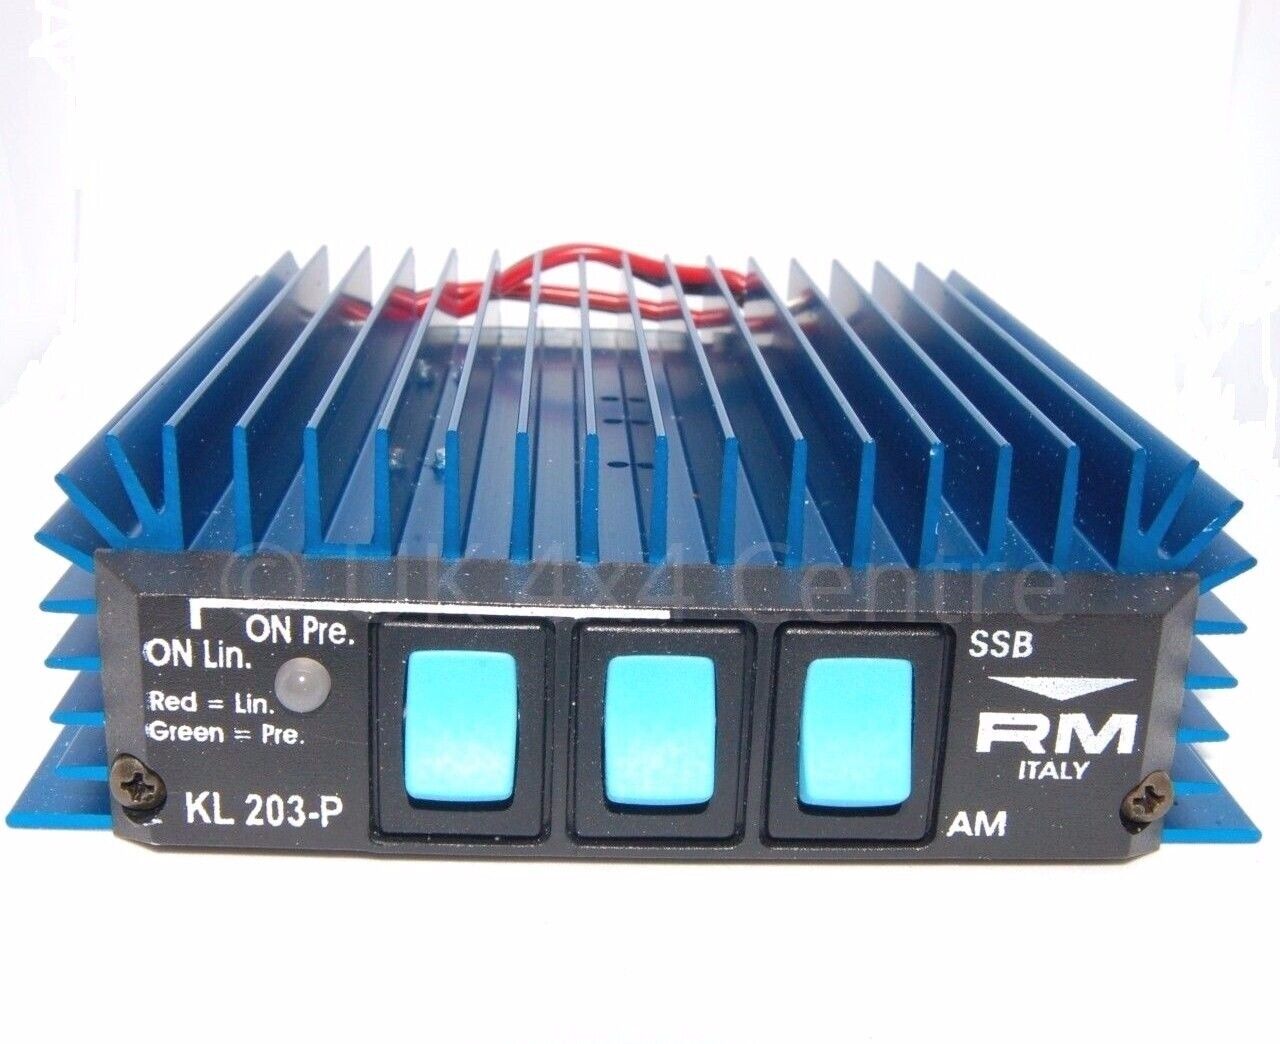 RM KL203/P 100 Watt linear Amplifier Burner Boots for CB or HAM Radio AM FM SSB